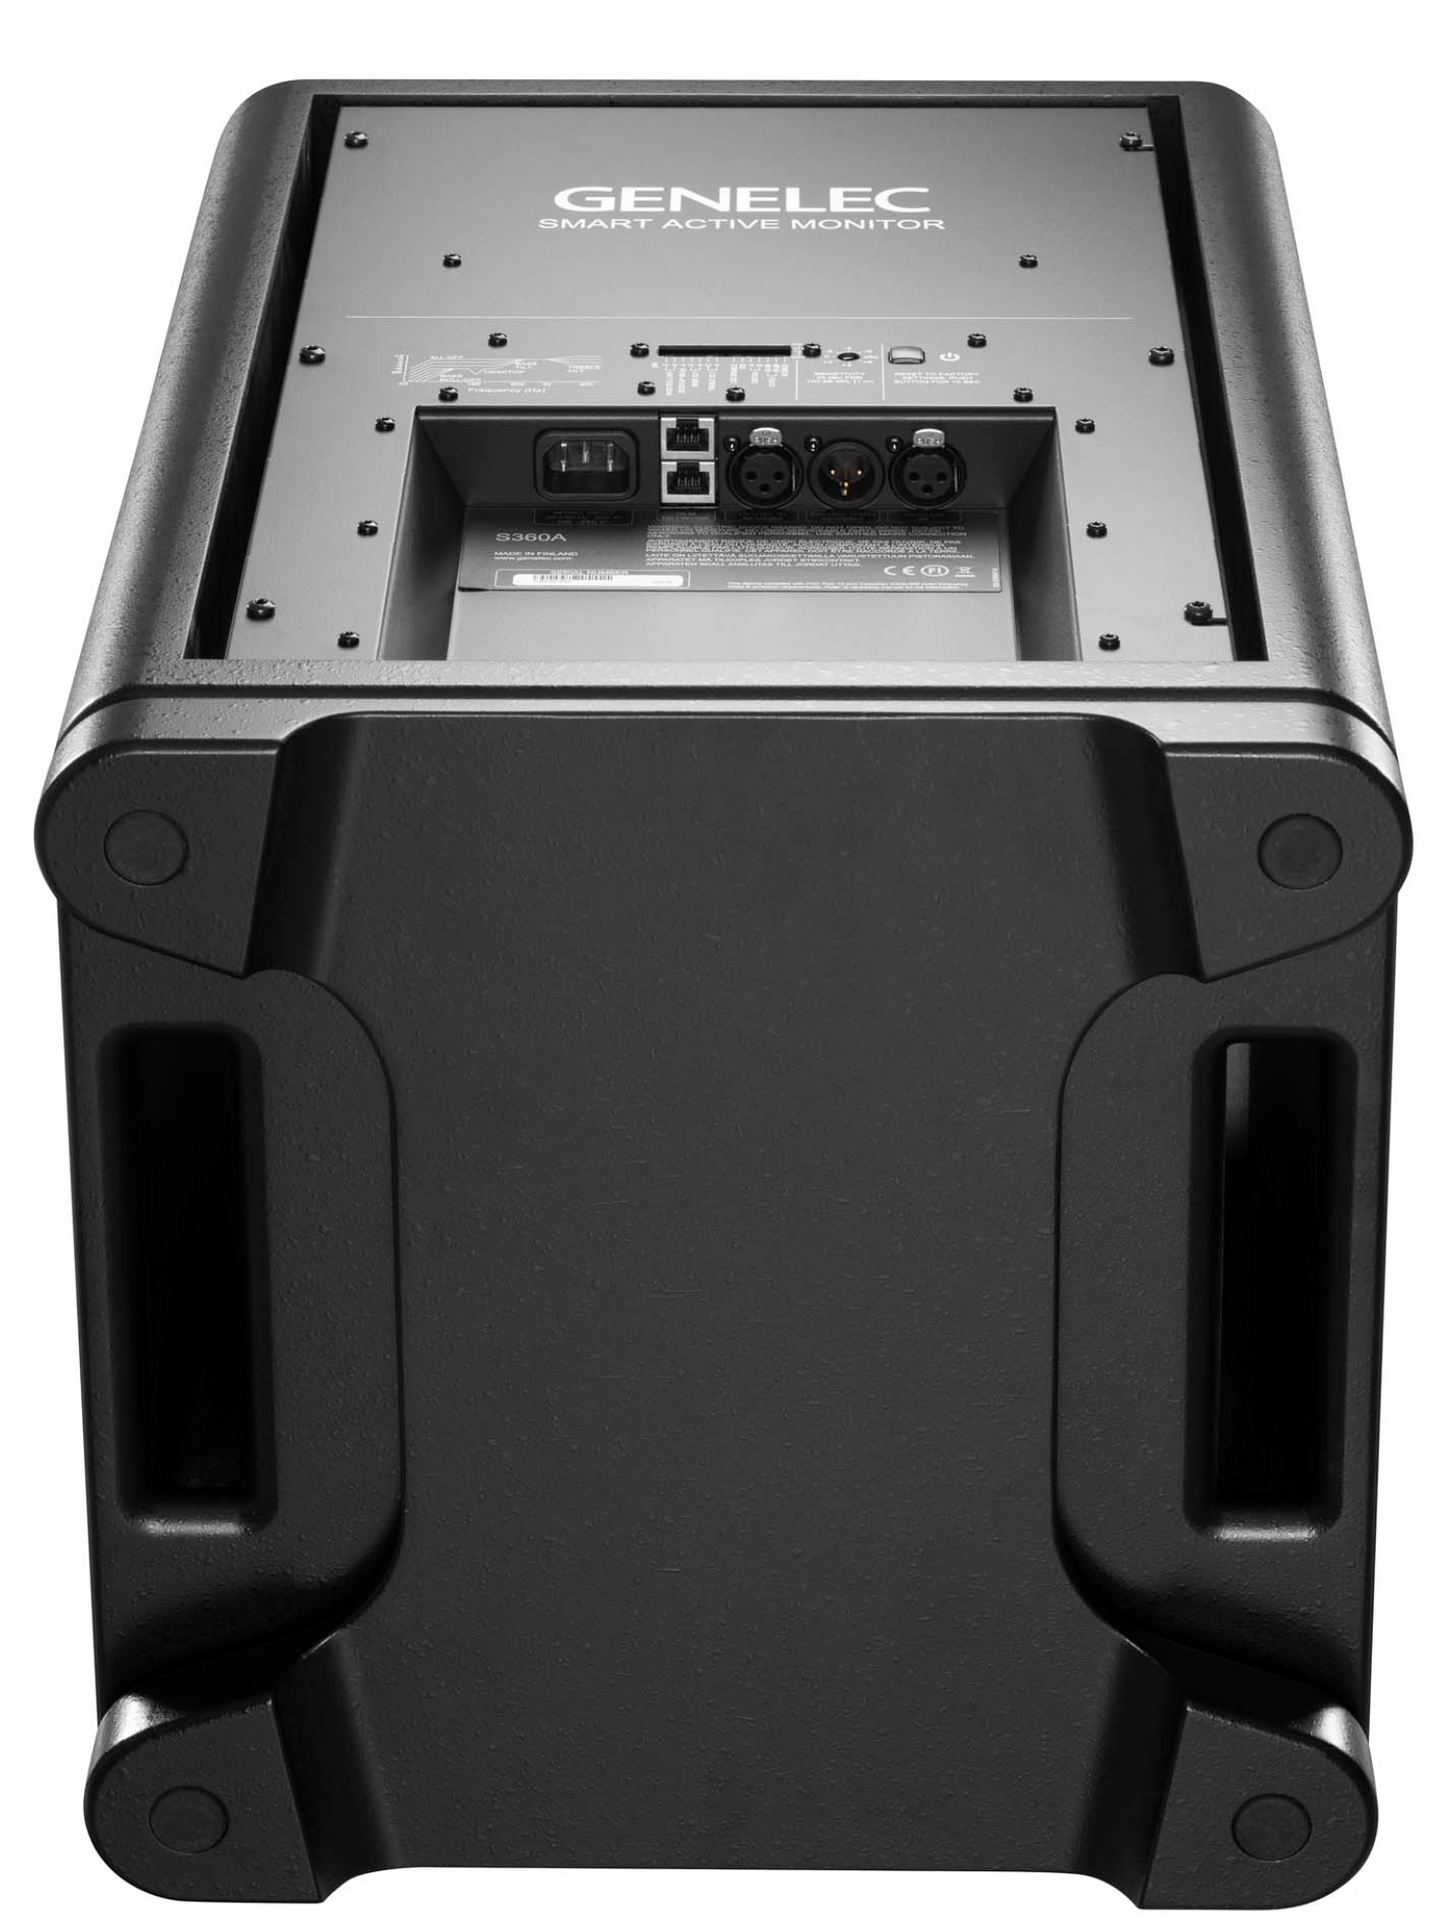 Genelec S360 SAM Active Studio Monitors in Black. Back and bottom image